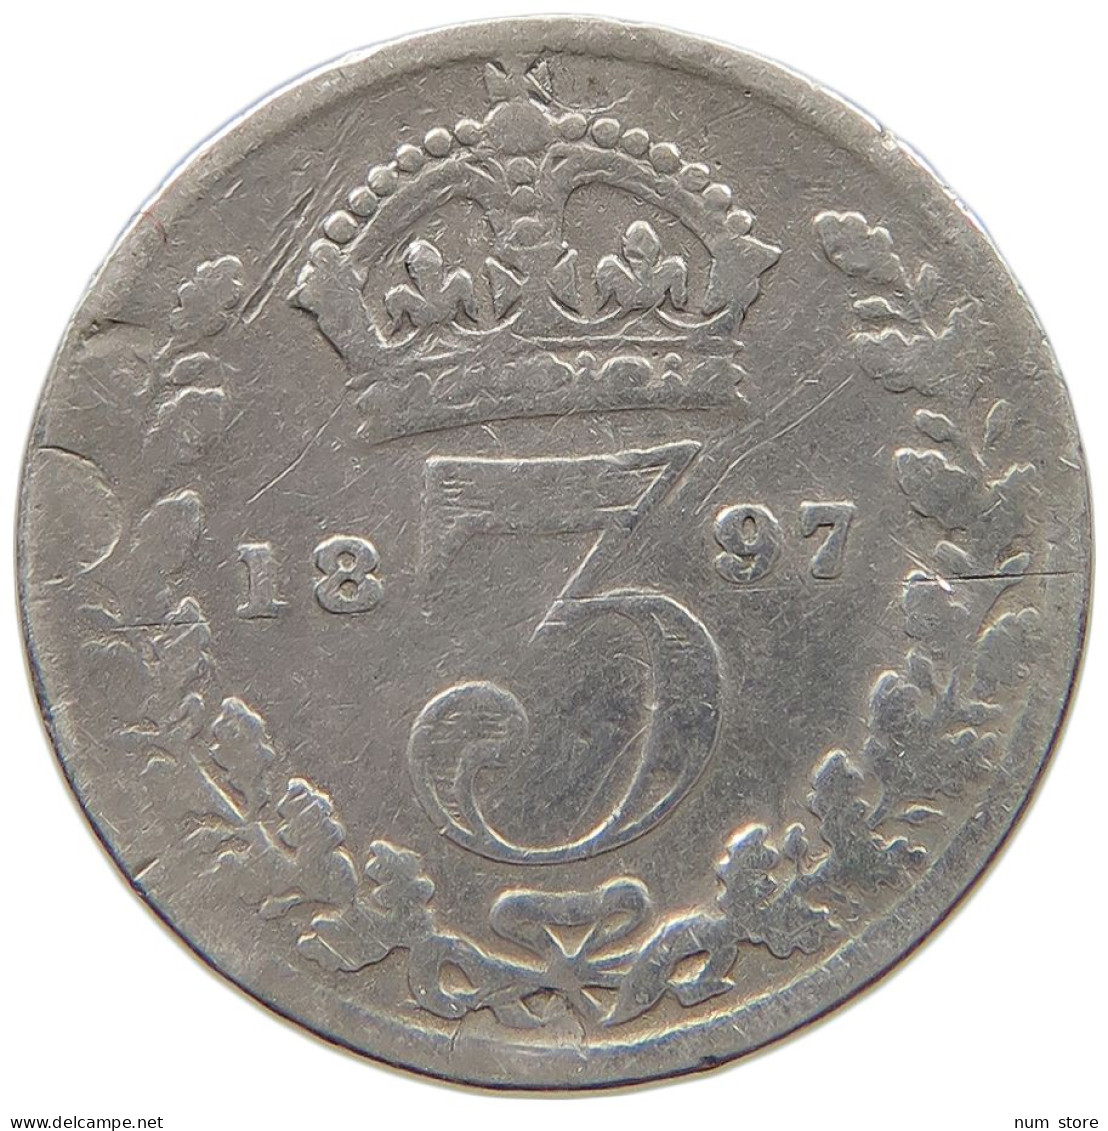 GREAT BRITAIN 3 THREEPENCE 1897 VICTORIA 1837-1901 #MA 026030 - F. 3 Pence